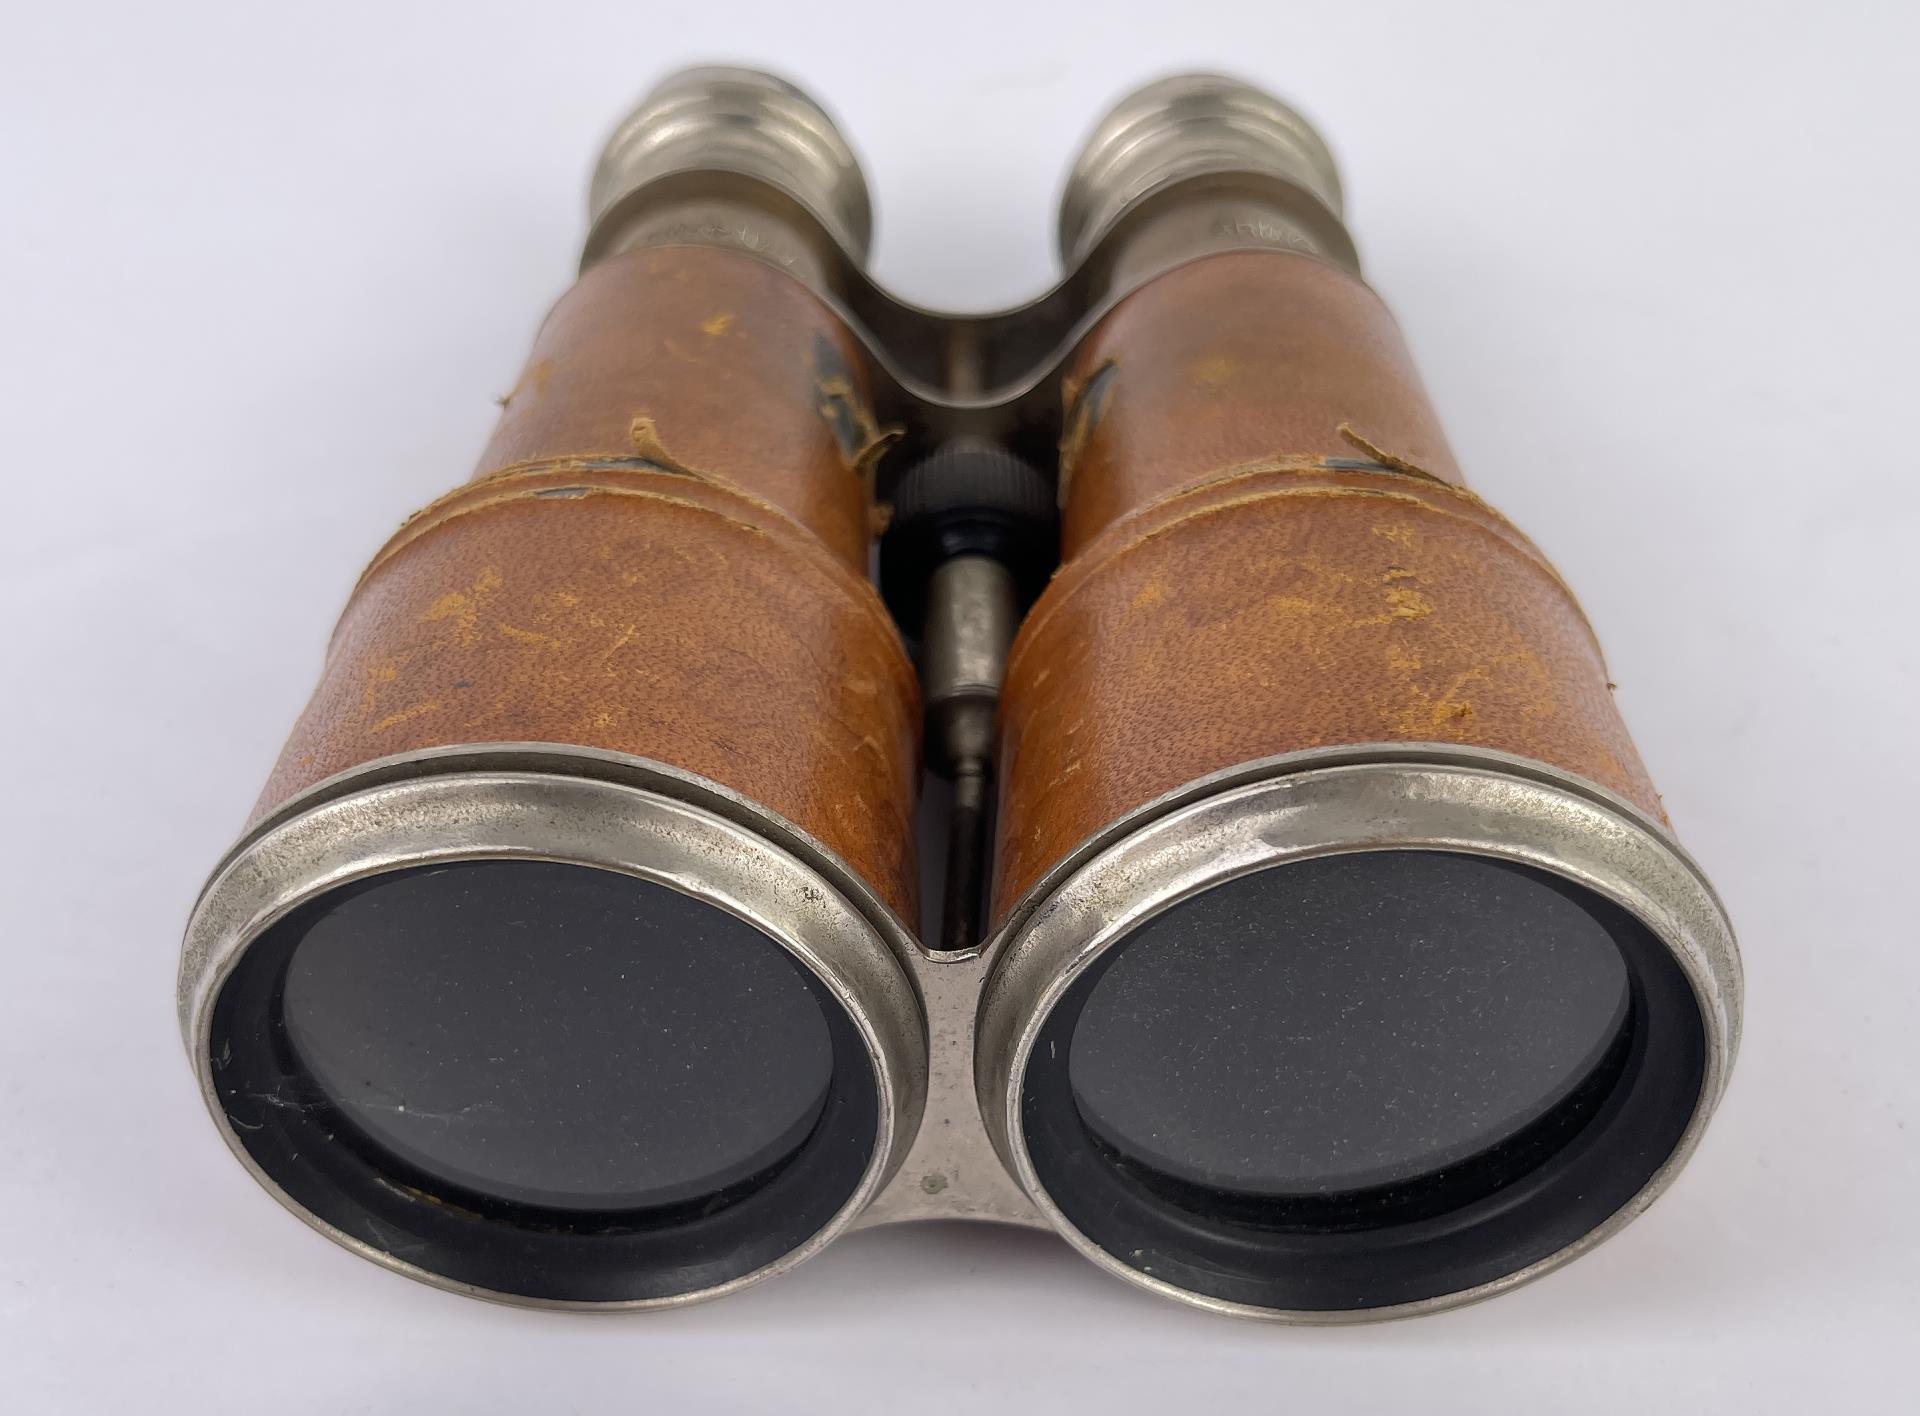 Indian Wars Montana US Army Binoculars